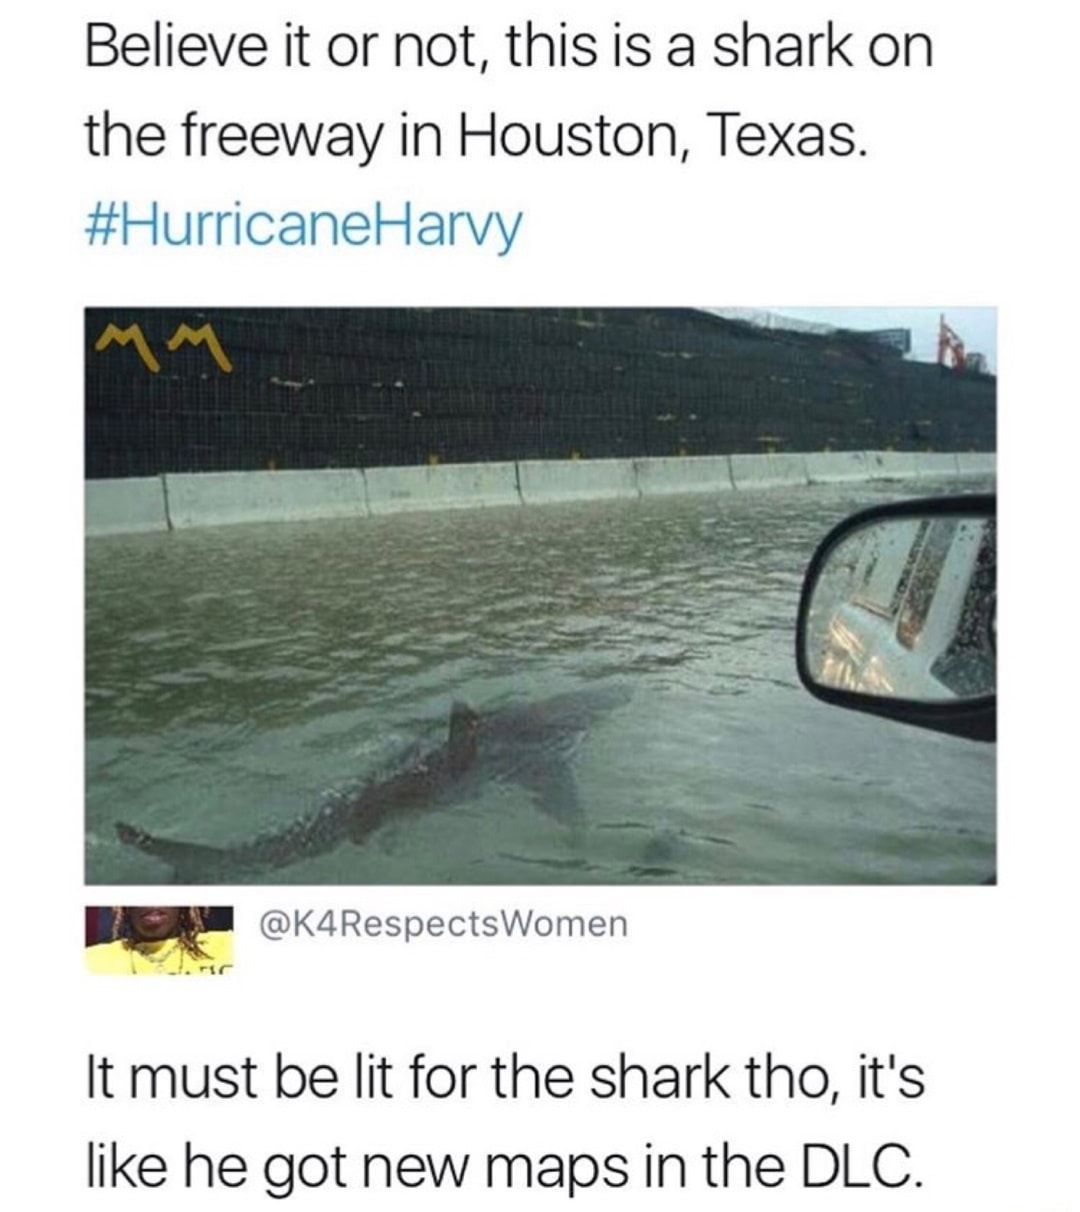 Meme of shark on the freeway in Houston